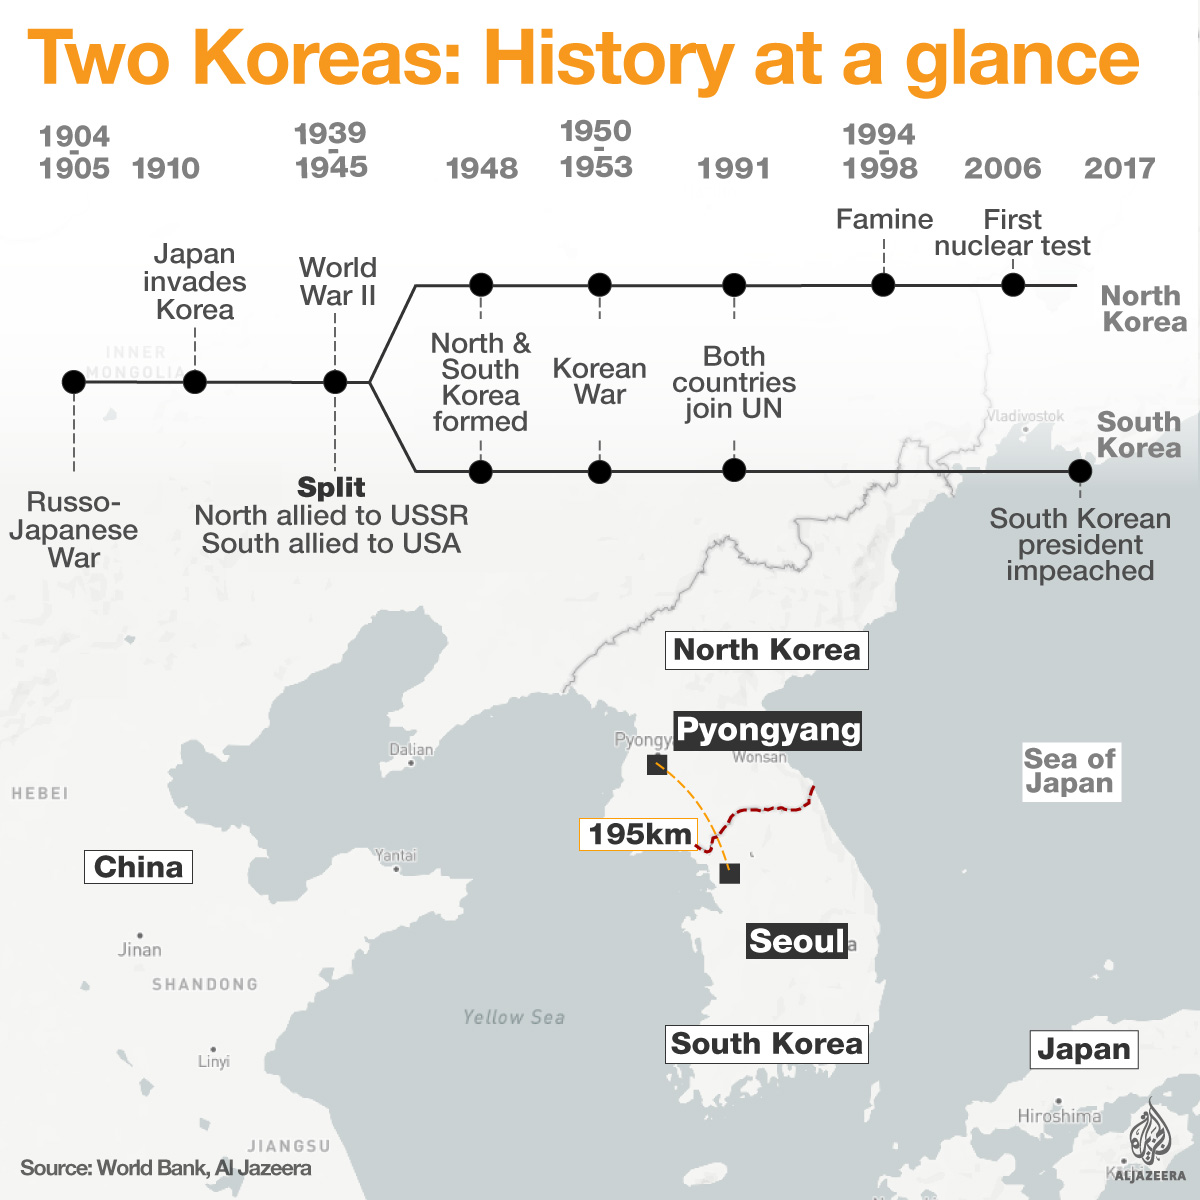 North Korea infographic timeline